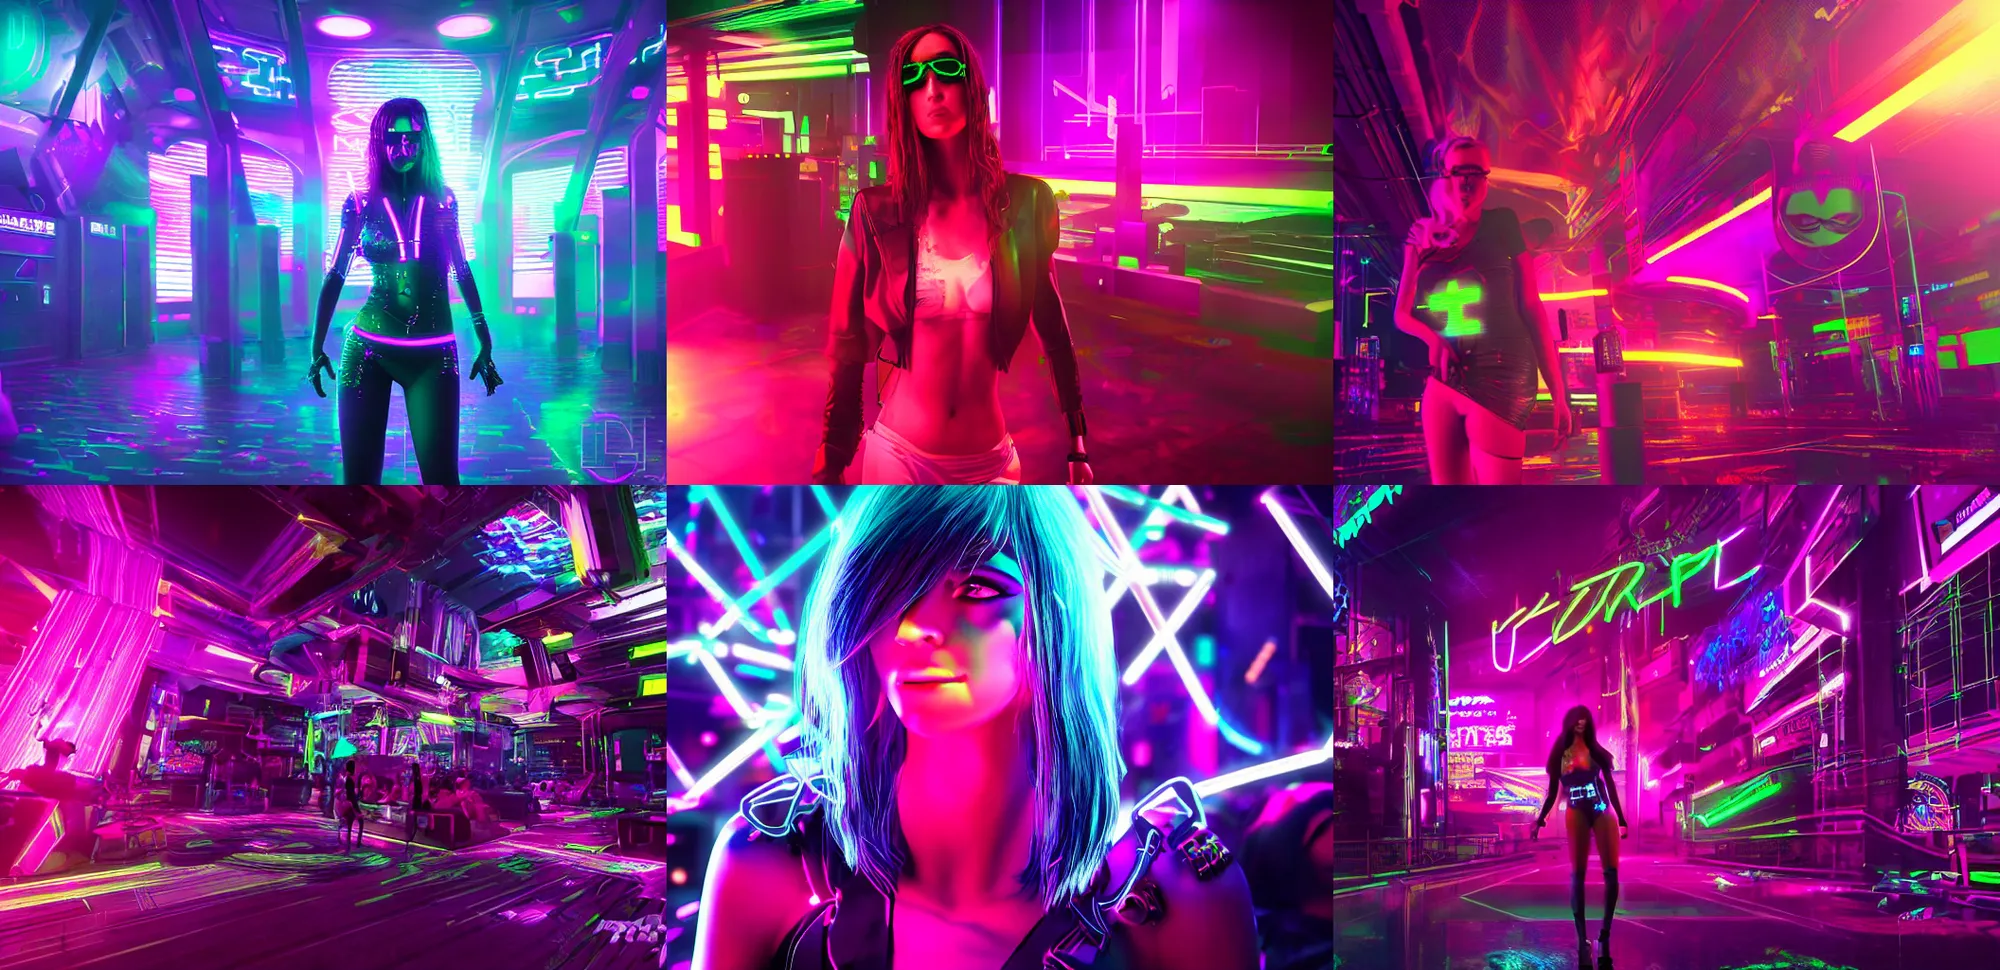 Prompt: Cyberpunk rave girl in a busy neon nightclub, highly detailed digital art, 8k Octane